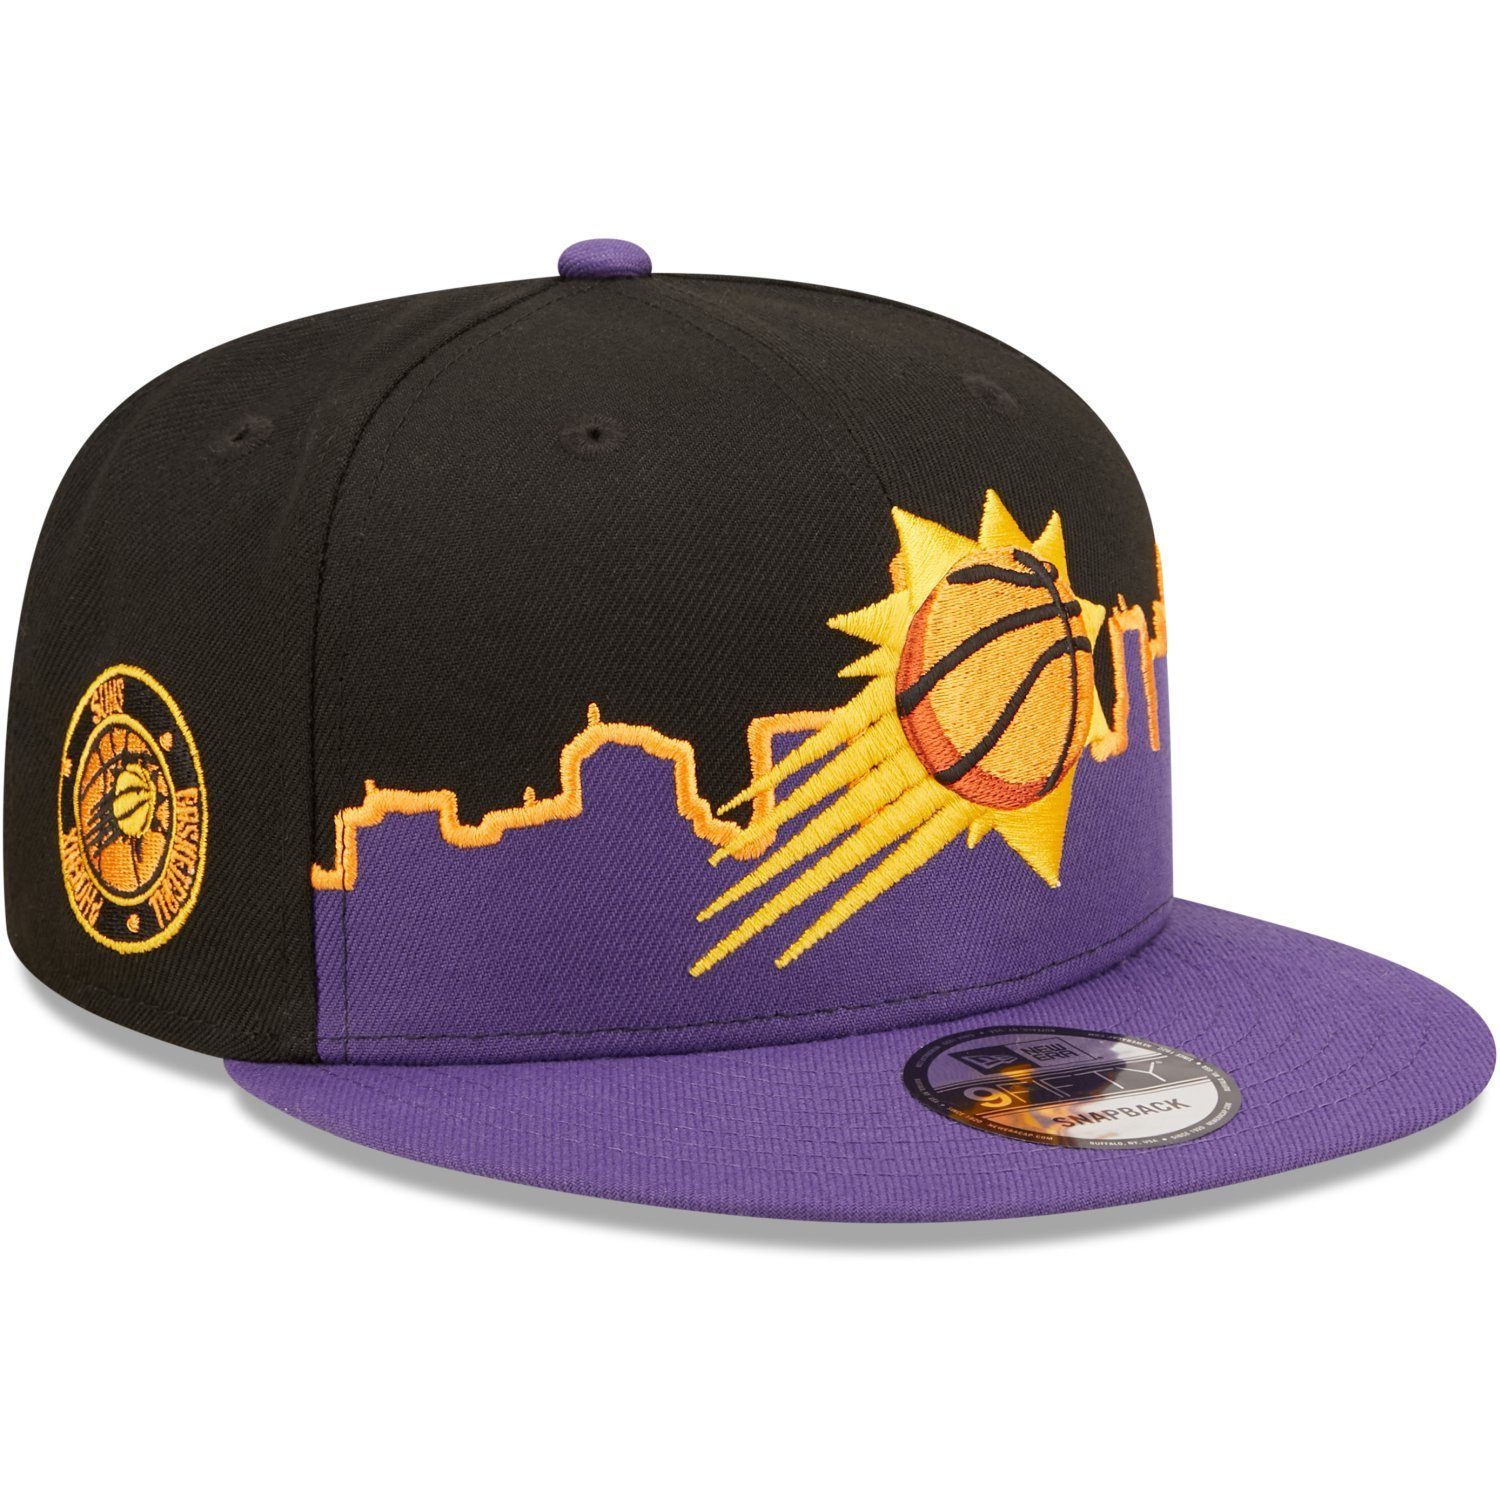 New Era Snapback Cap 9FIFTY NBA TIPOFF Phoenix Suns